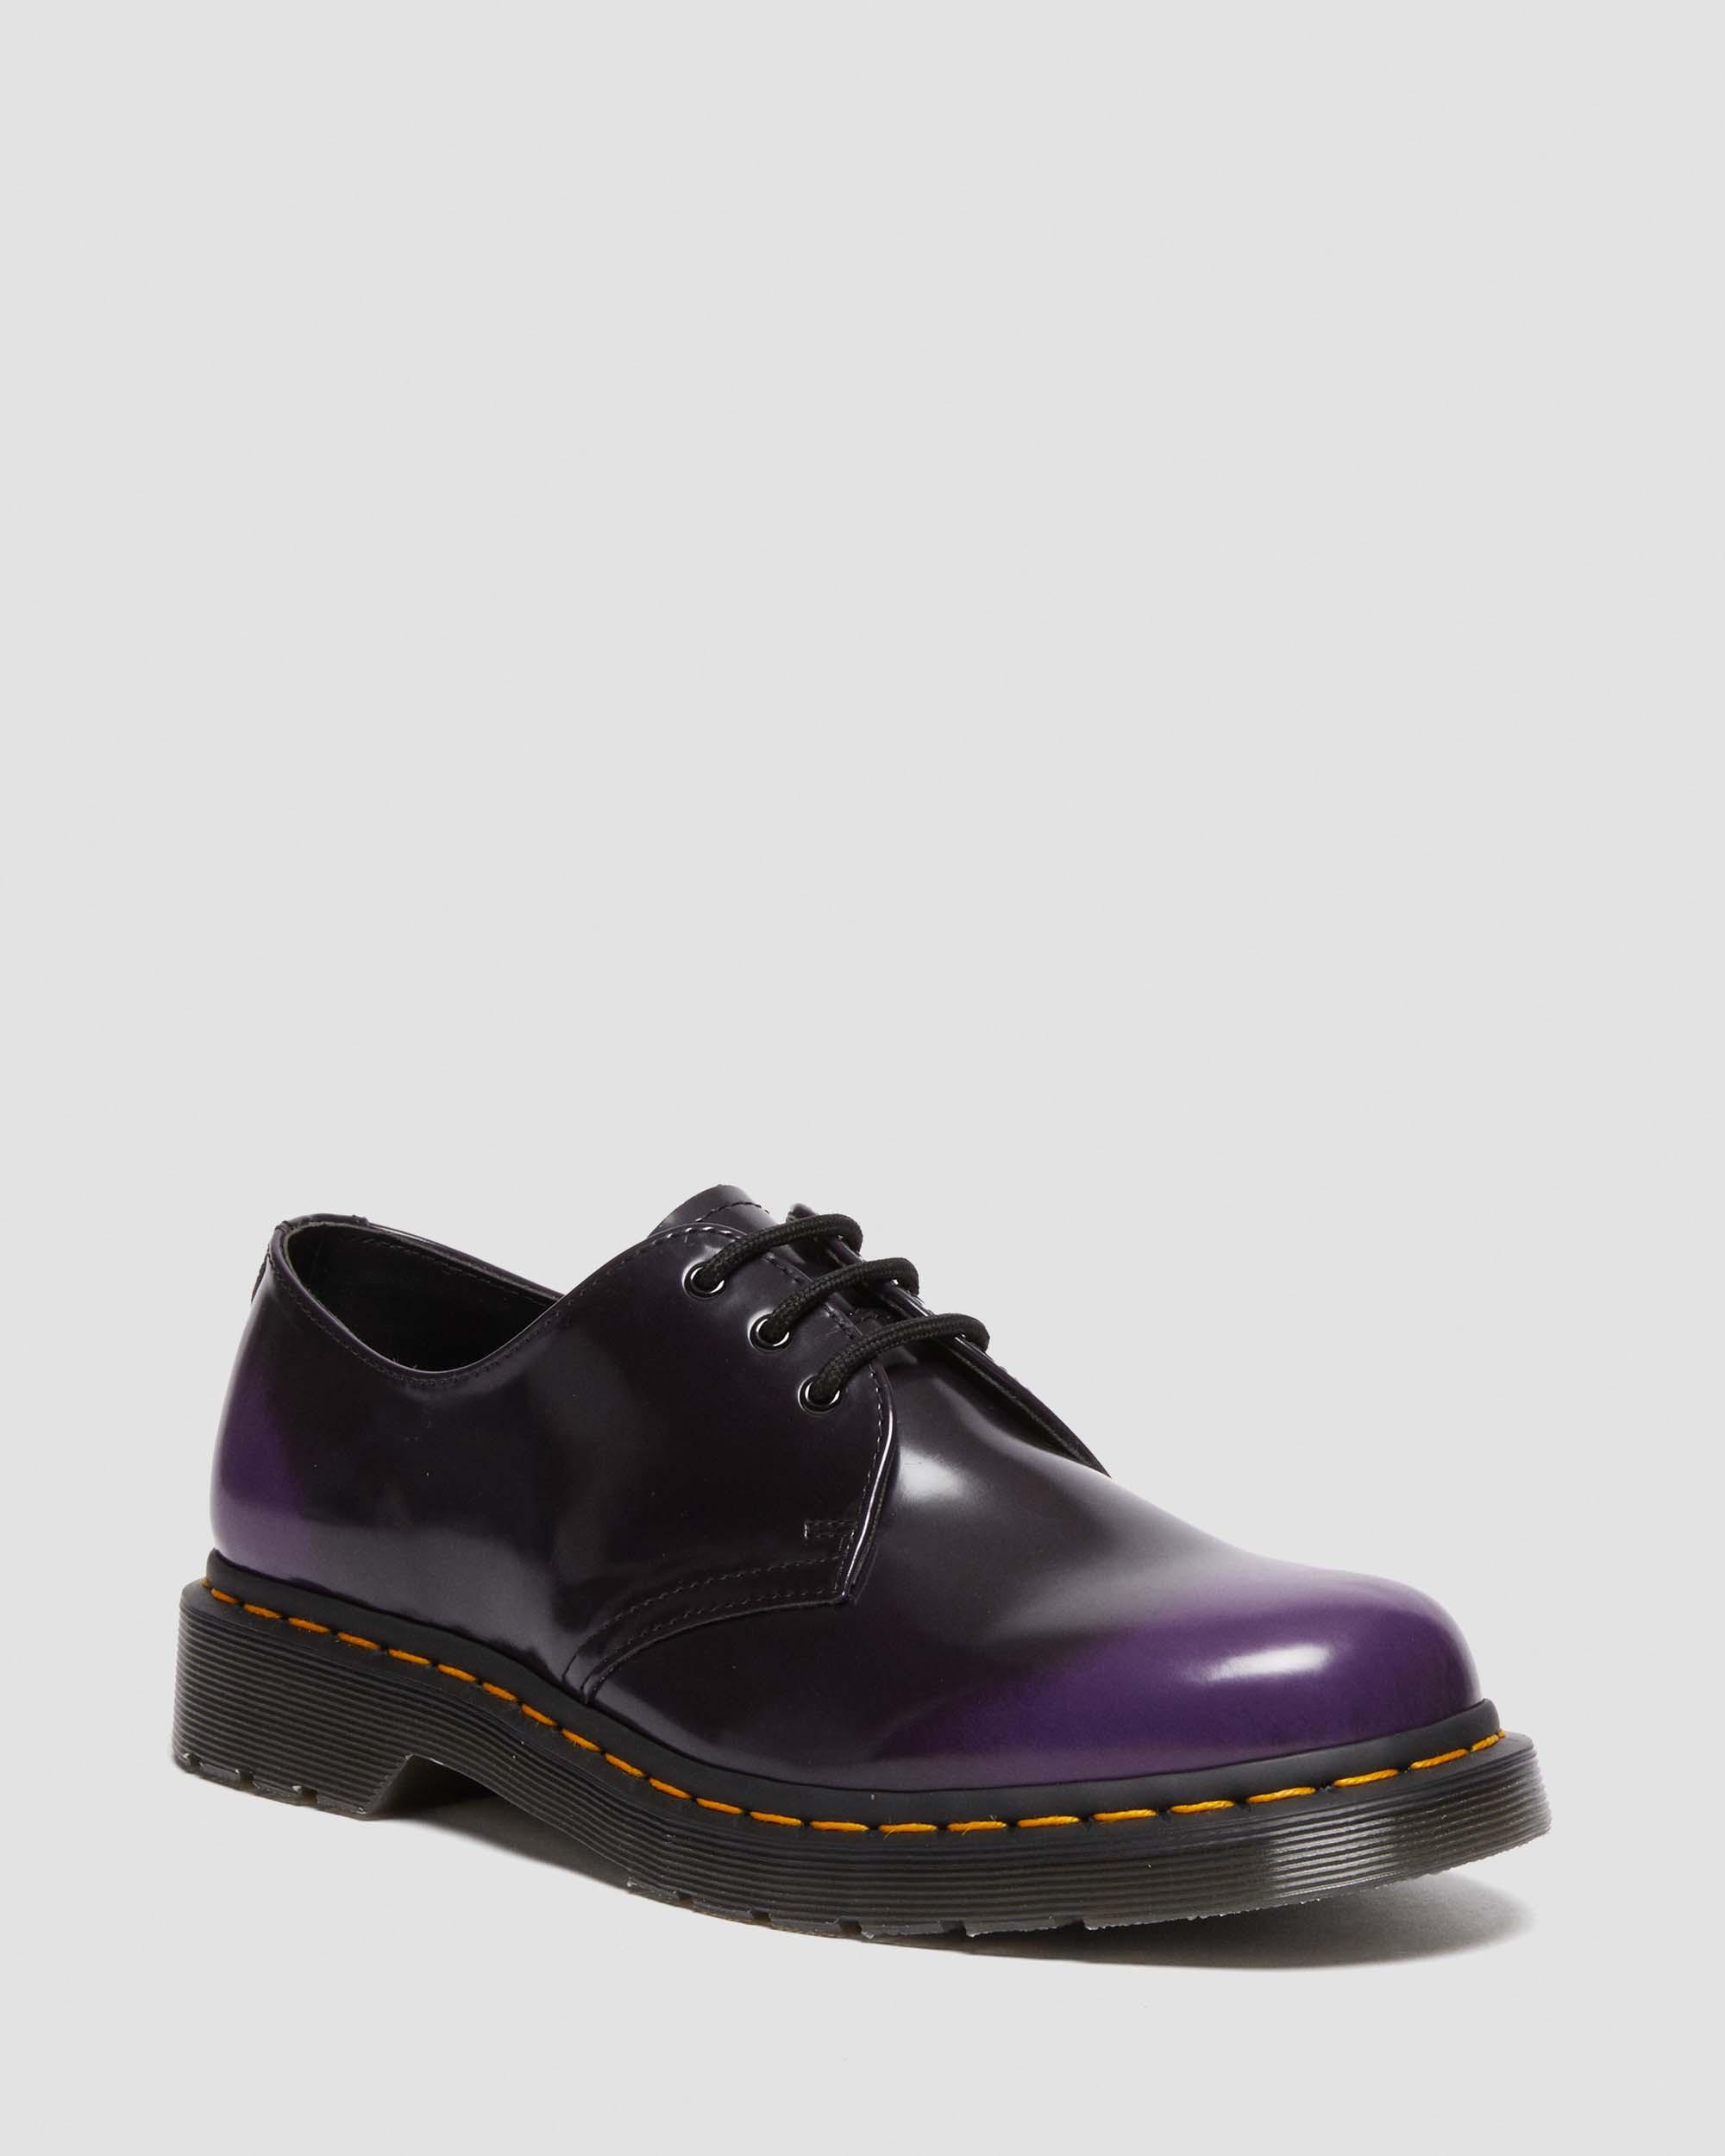 Oxford Purple | Black/rich Vegan Dr. Martens in 1461 Shoes